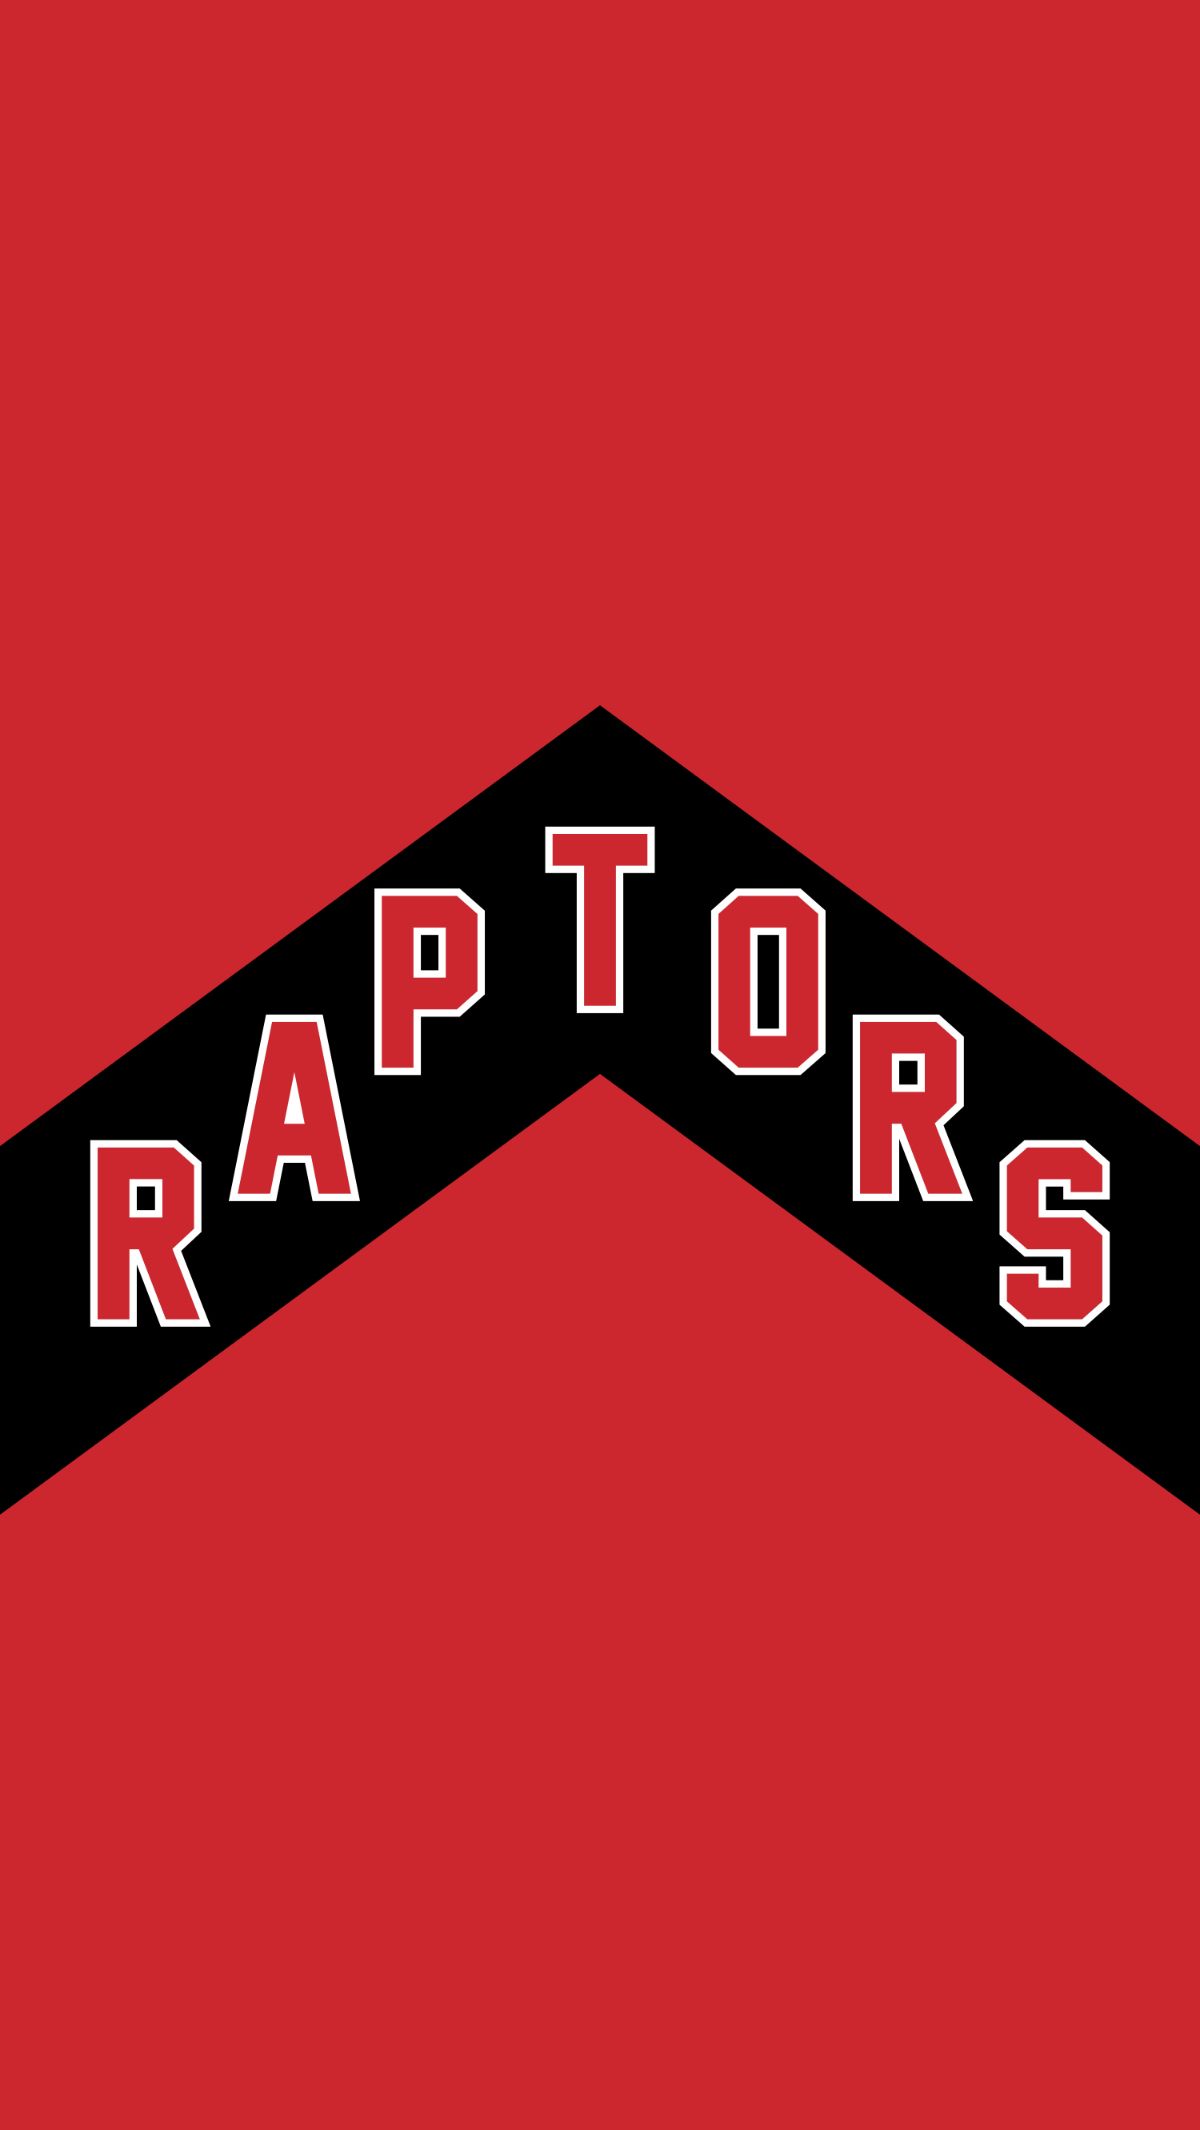 RAPTORS Basketball City Sticker by sportsign. Toronto raptors basketball, Raptors basketball, Raptors